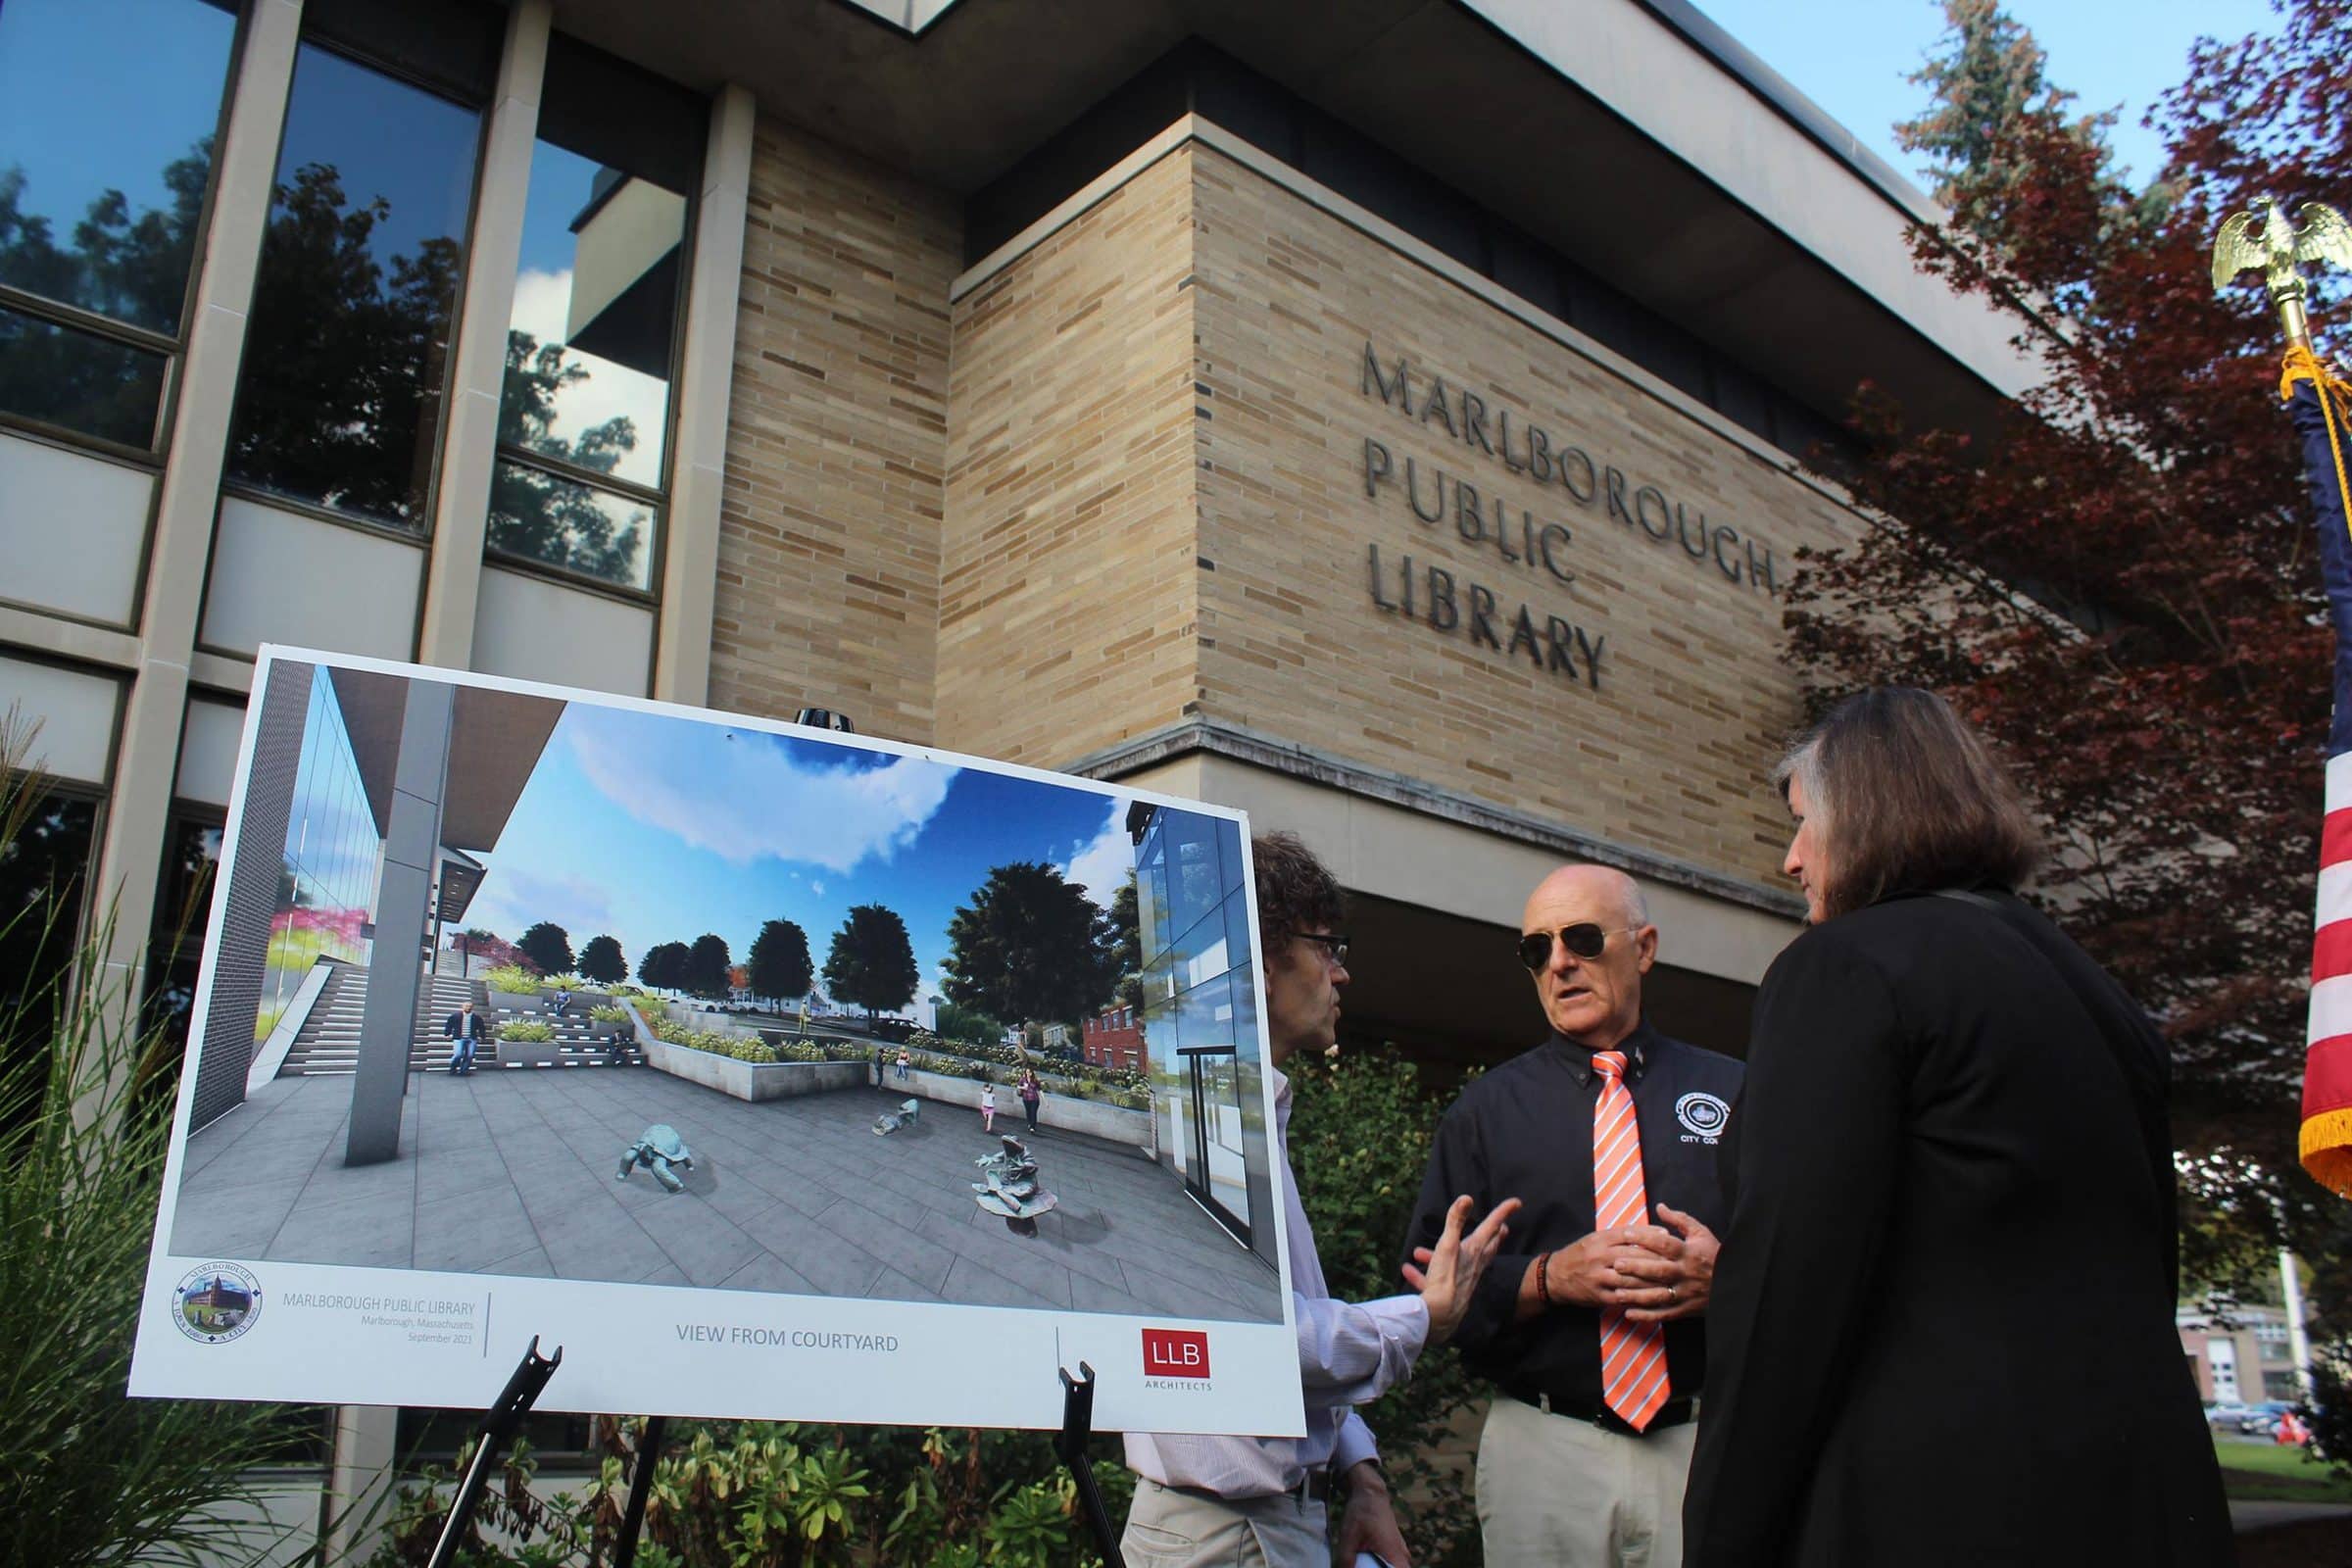 Marlborough breaks ground on library renovations